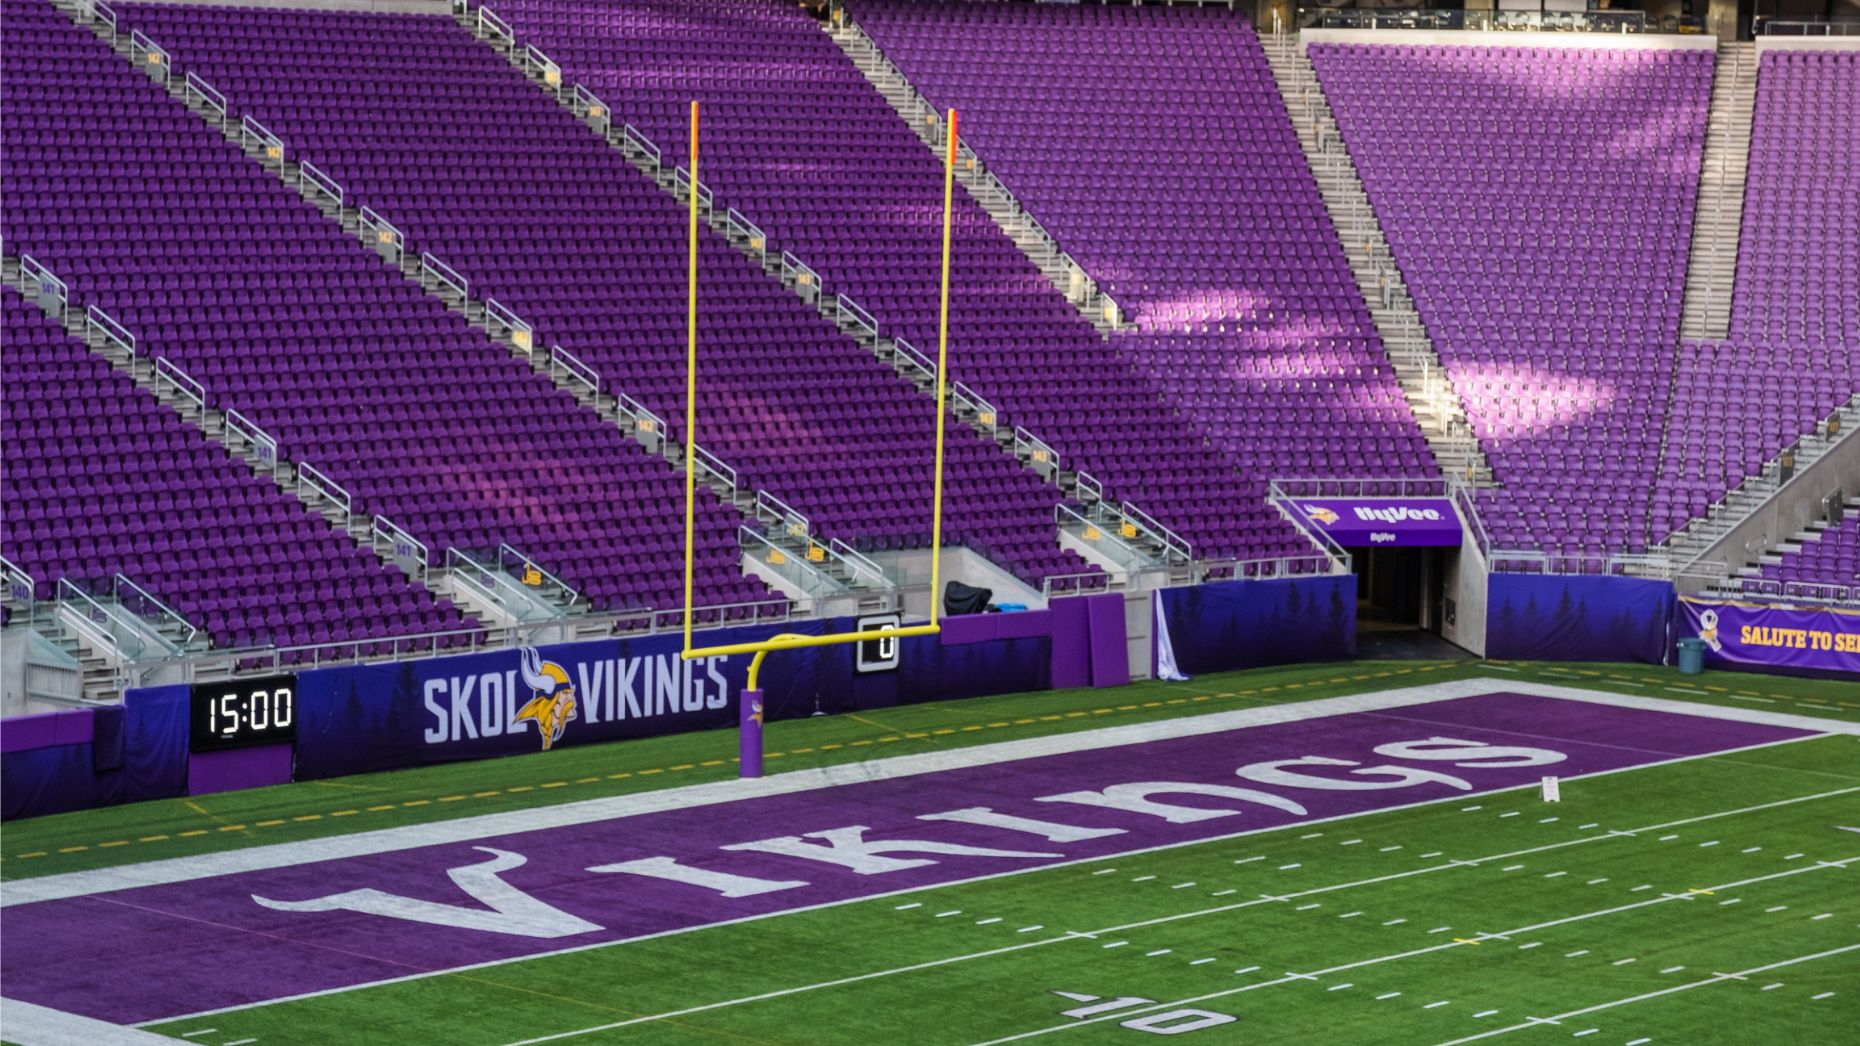 'Skol Vikings' sign at the Minnesota Vikings NFL stadium. Photo: CK Foto / Shutterstock.com.